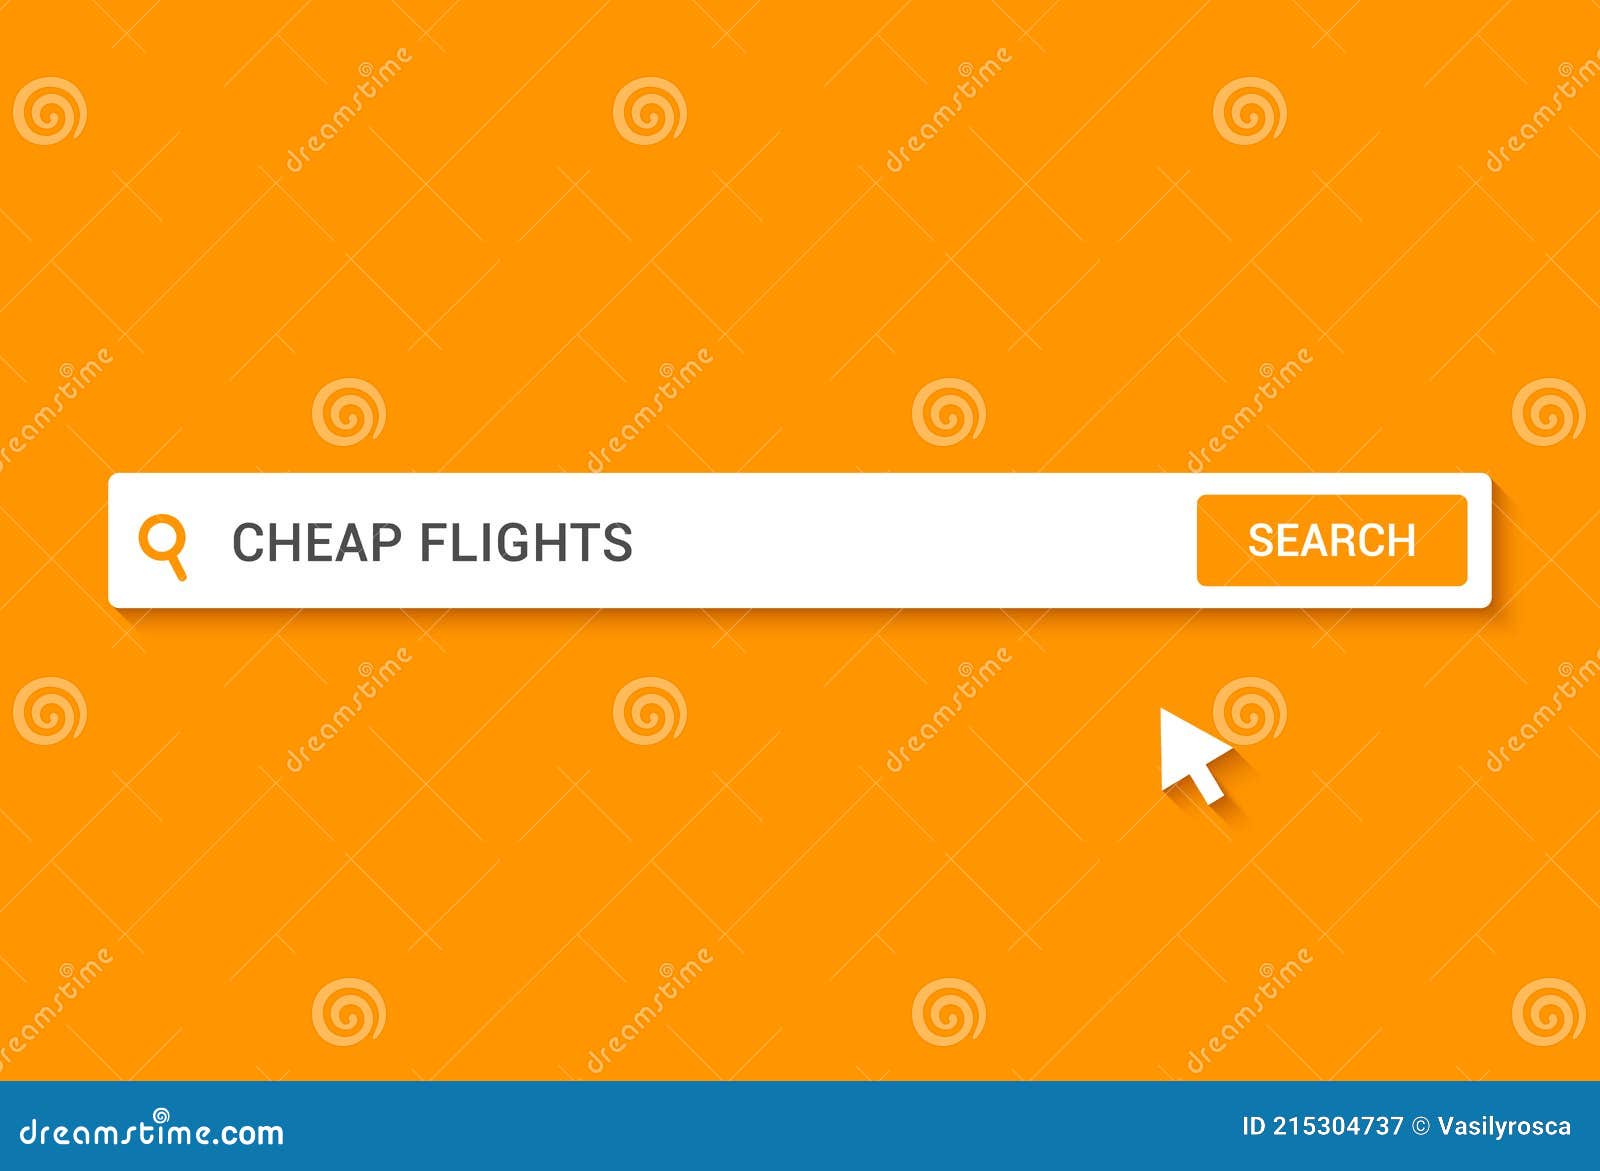 Cheap Flight Ticket Offer. Flight Promo Travel Deals Discount Search